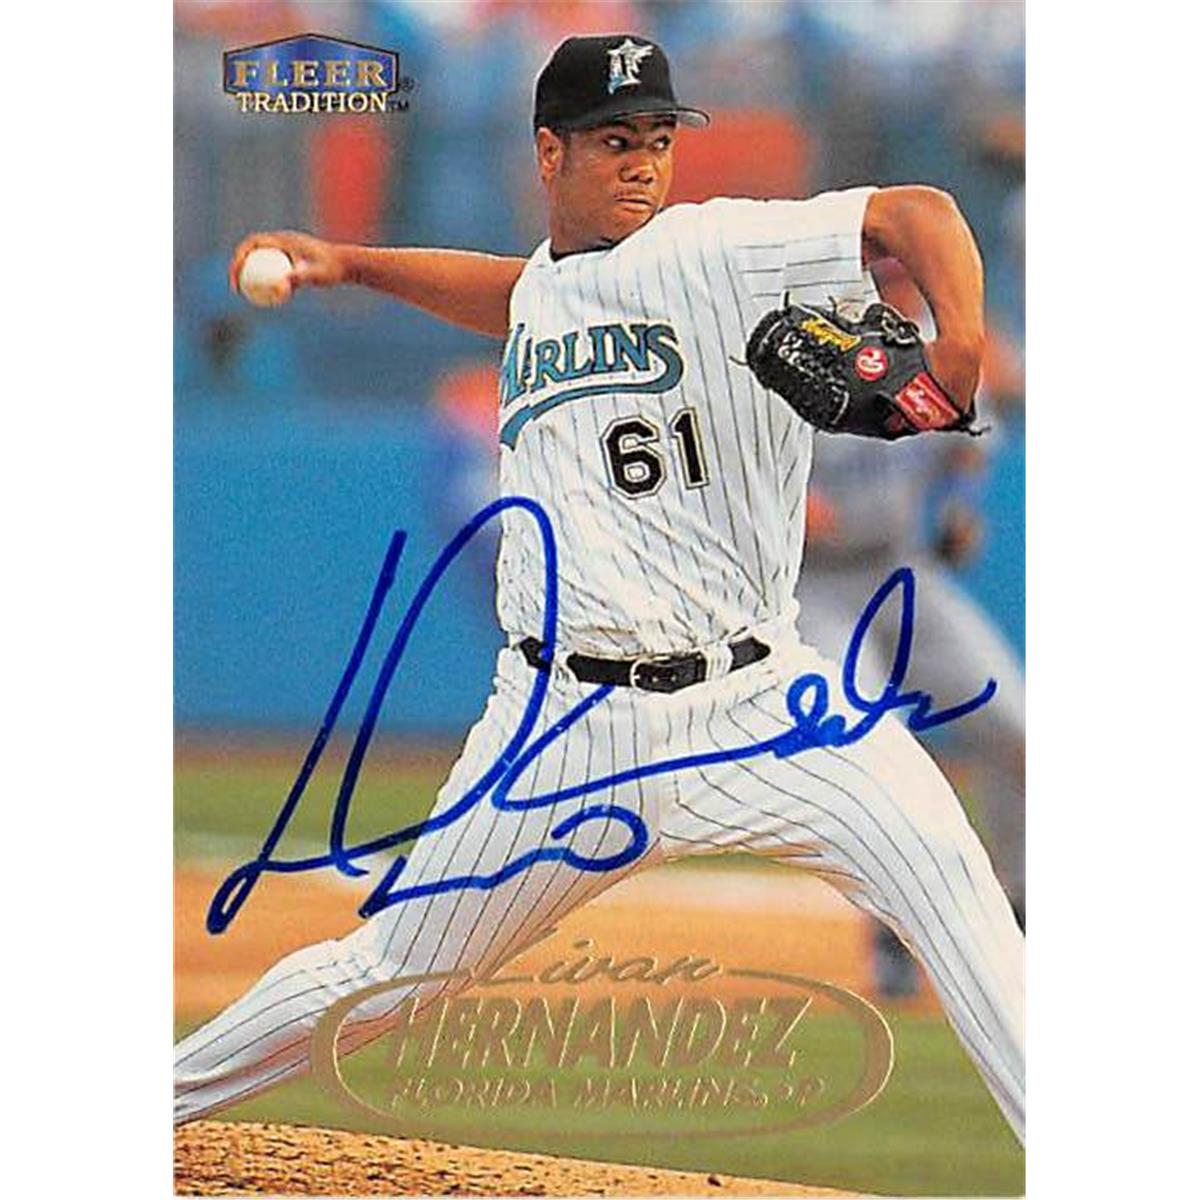 Autograph Warehouse 421343 Livan Hernandez Autographed Baseball Card Florida Marlins 1998 Fleer Tradition No.366